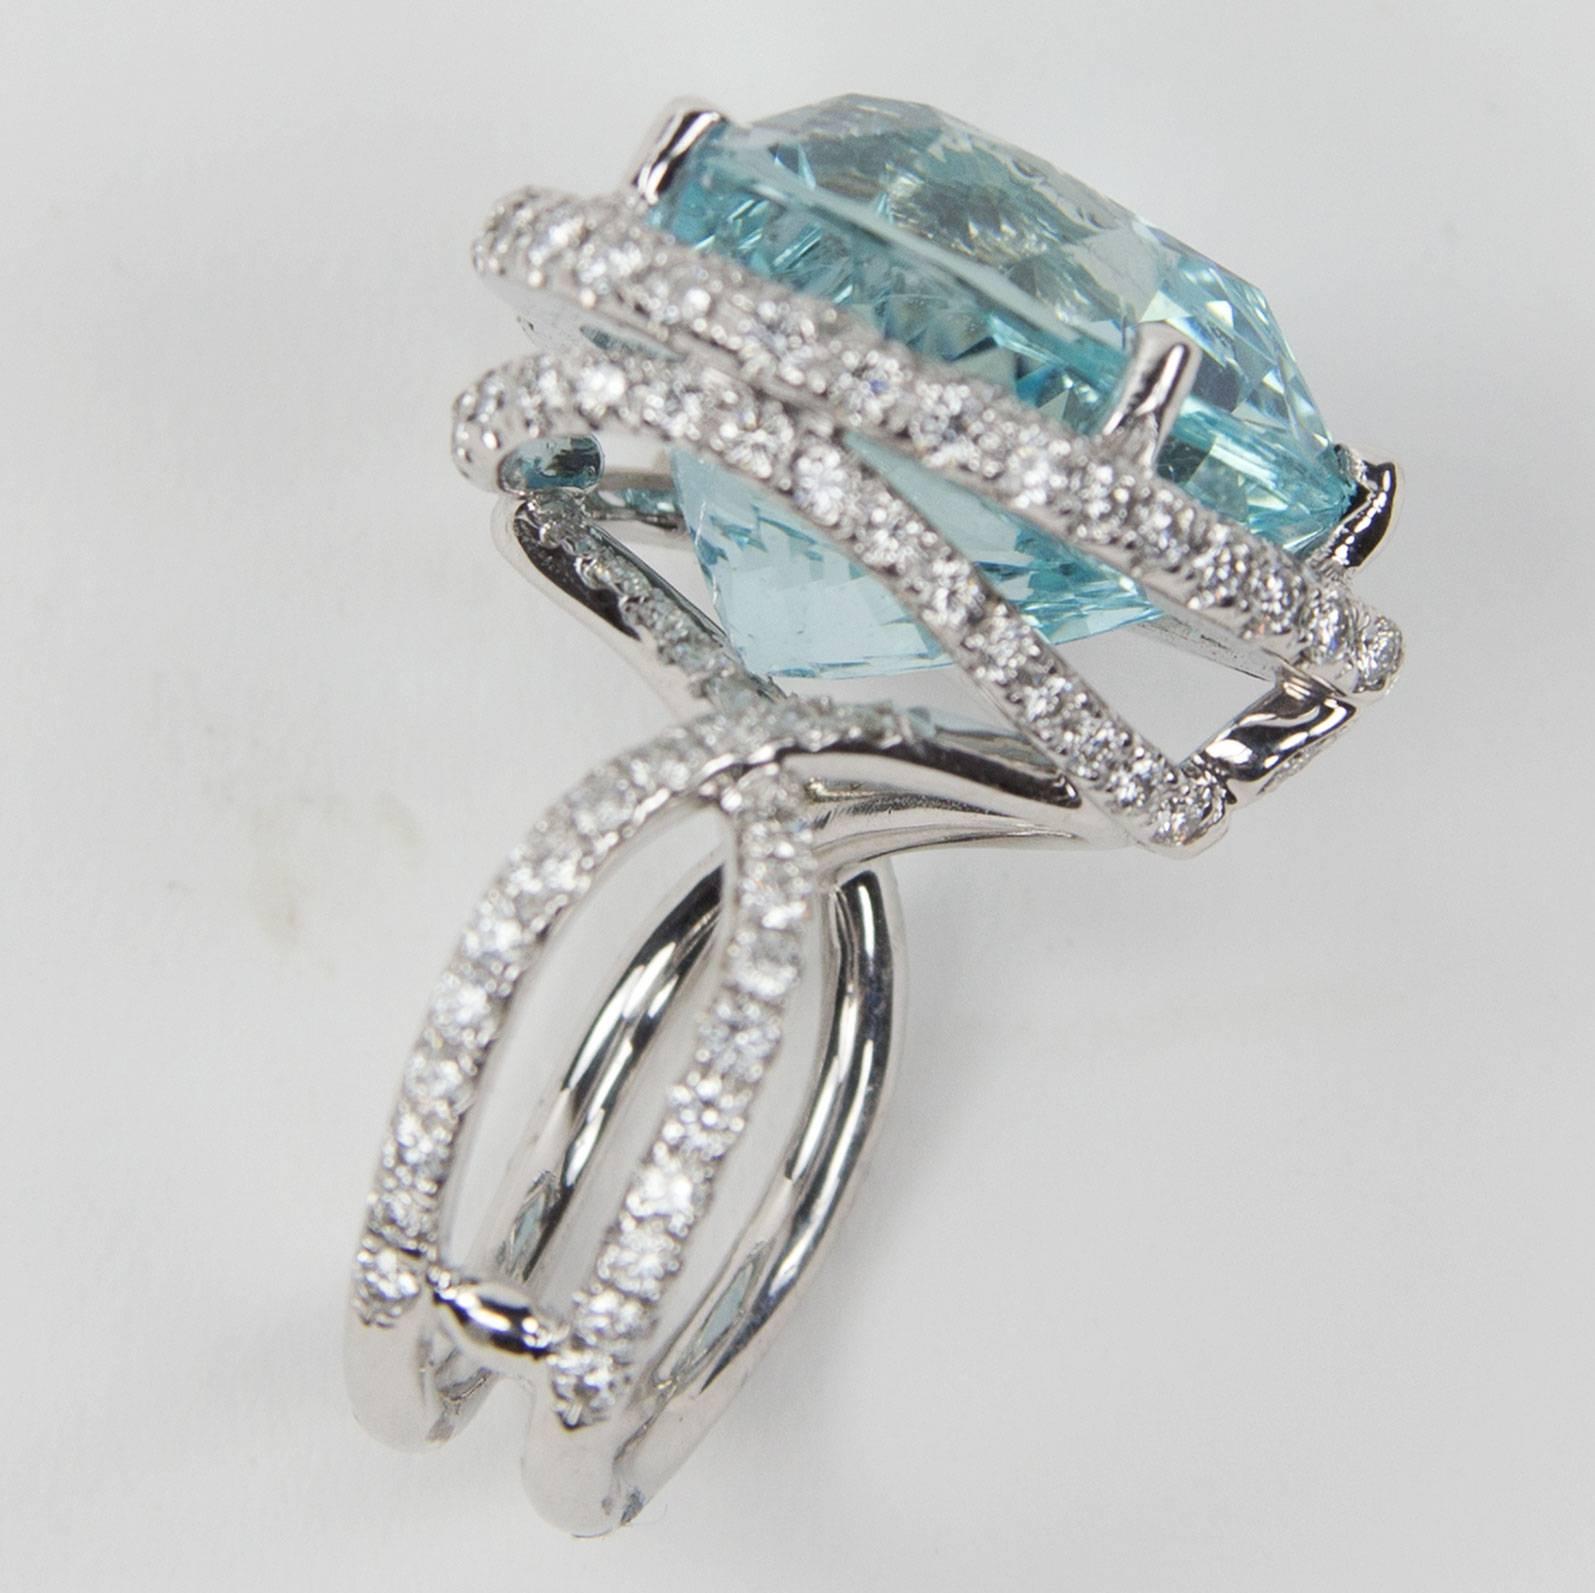 Mixed Cut 29.60 Carat Heart Shape Aquamarine Diamond Gold Ring Estate Fine Jewelry